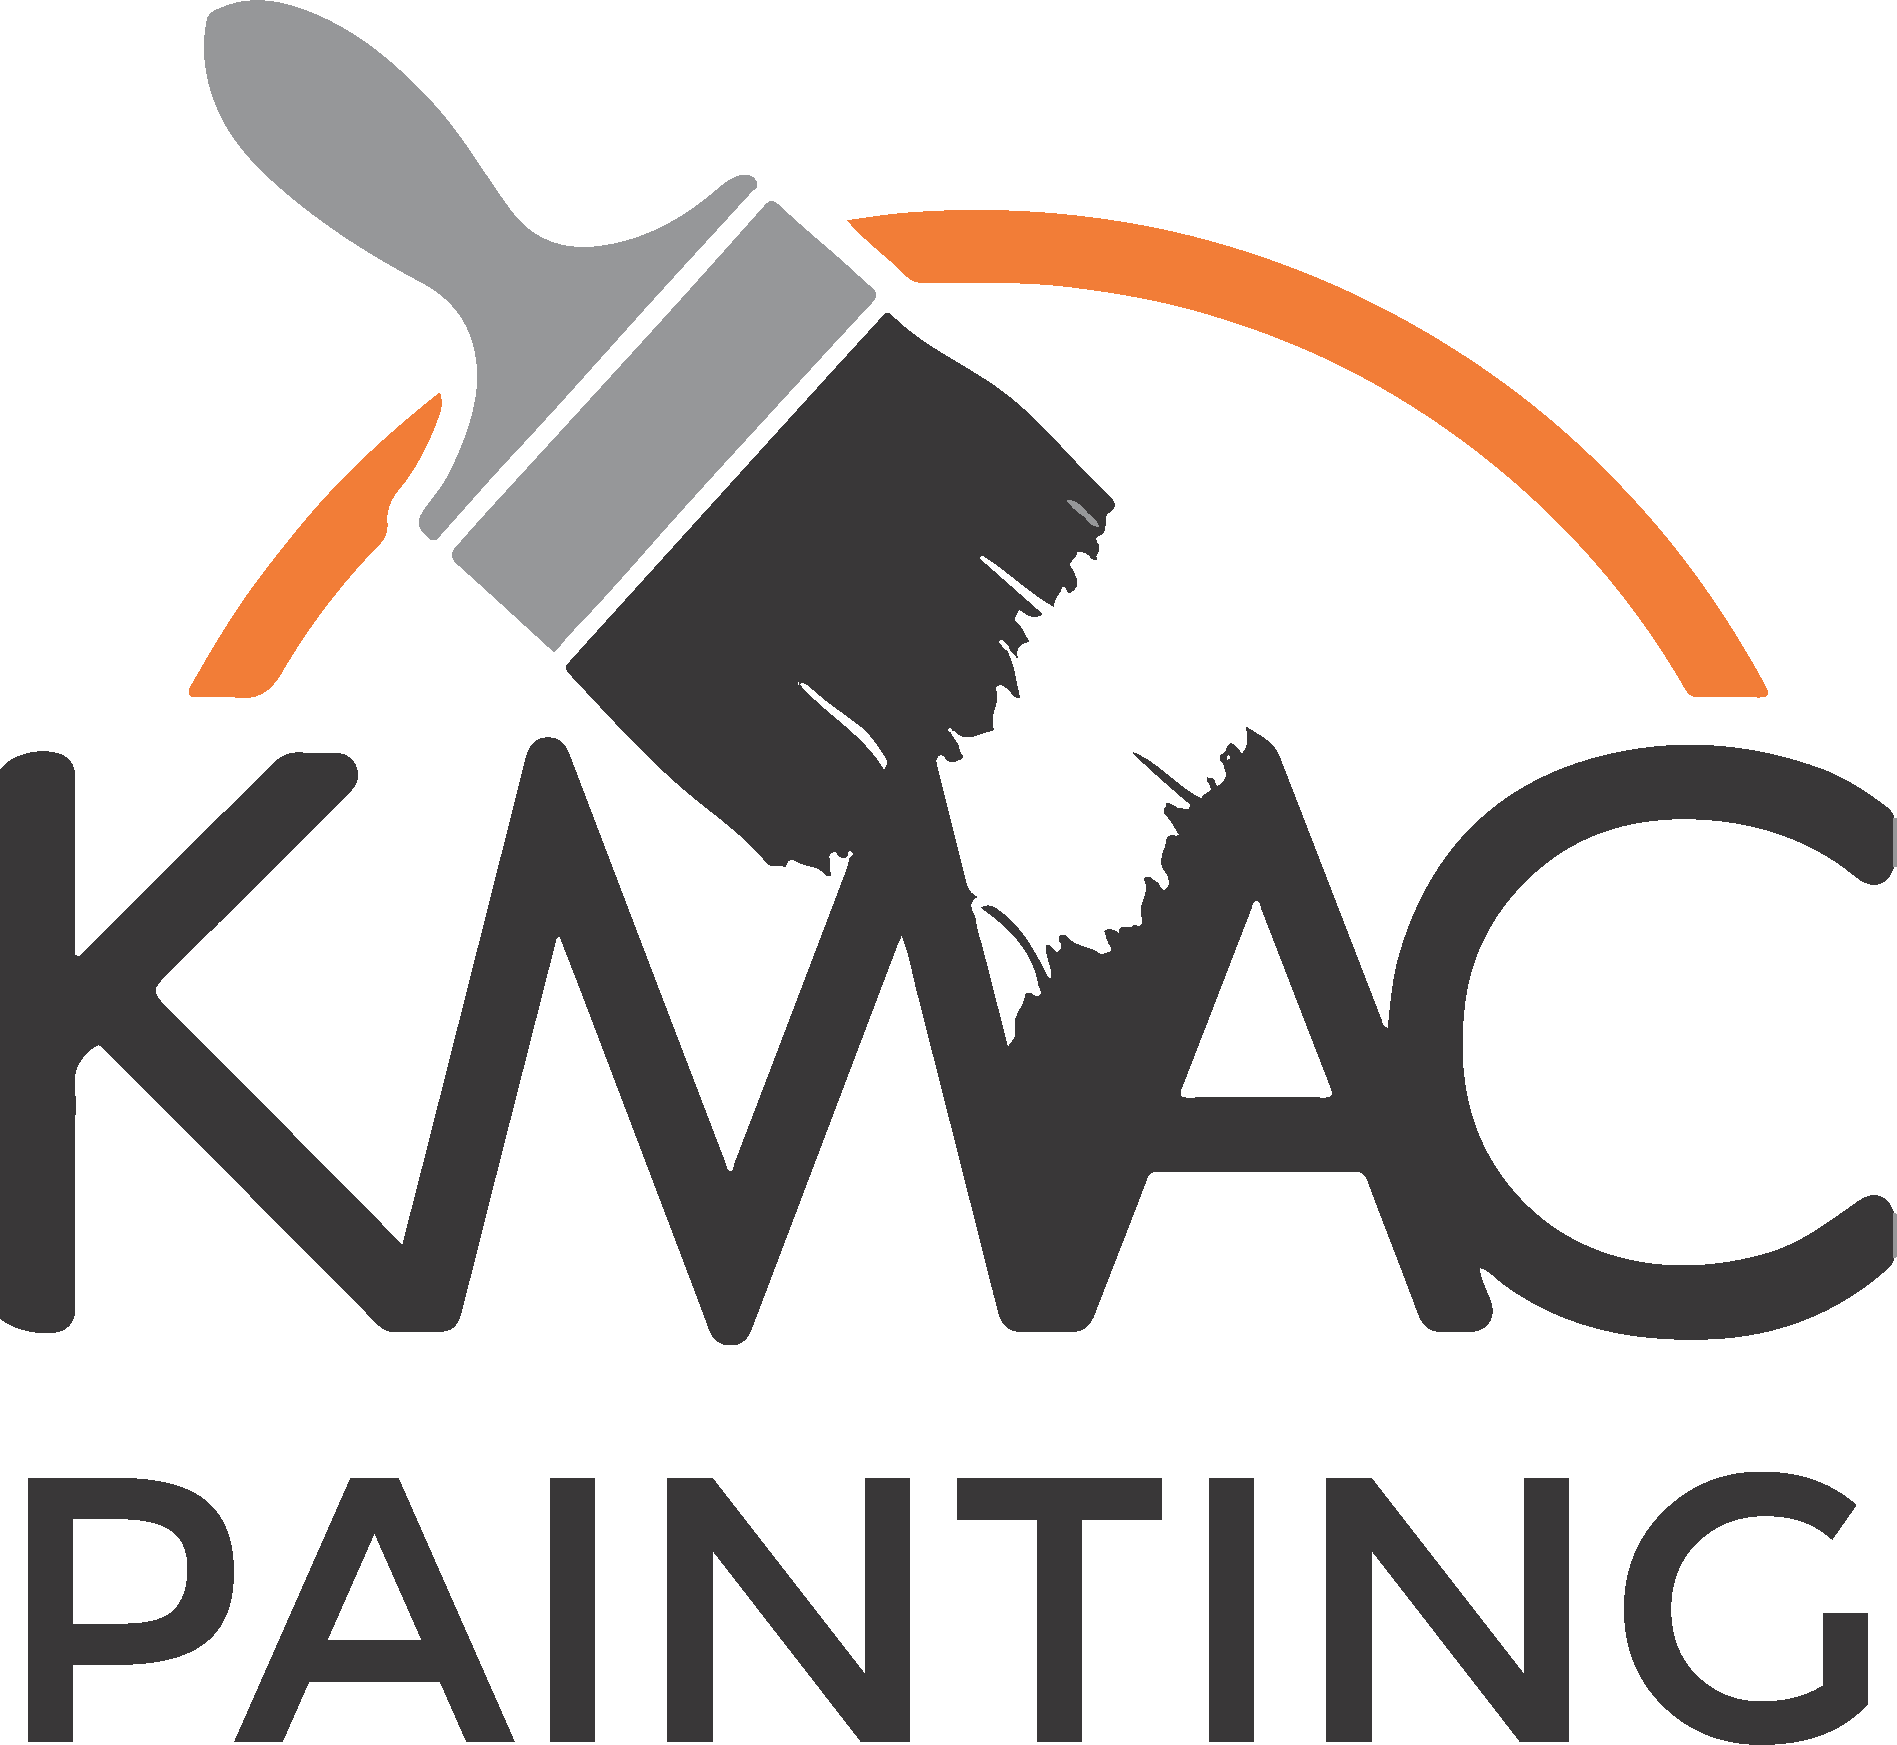 kmac painting logo